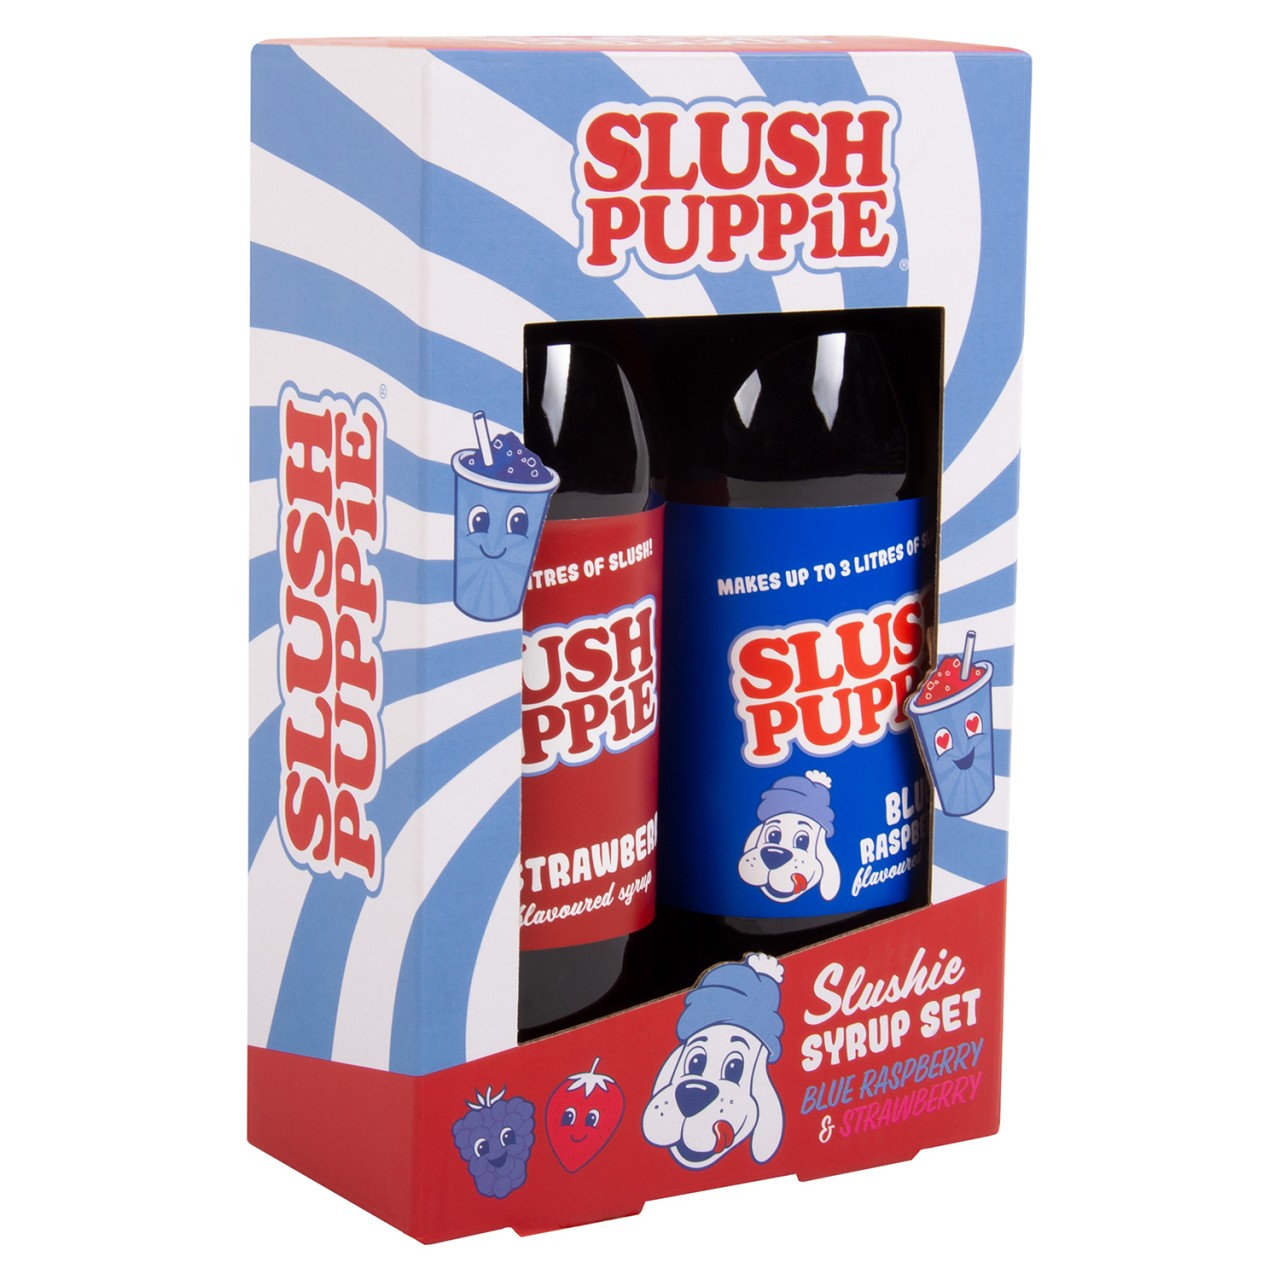 Slush Puppie Syrup Duo Pack (Blue Rasp&Strawberry)